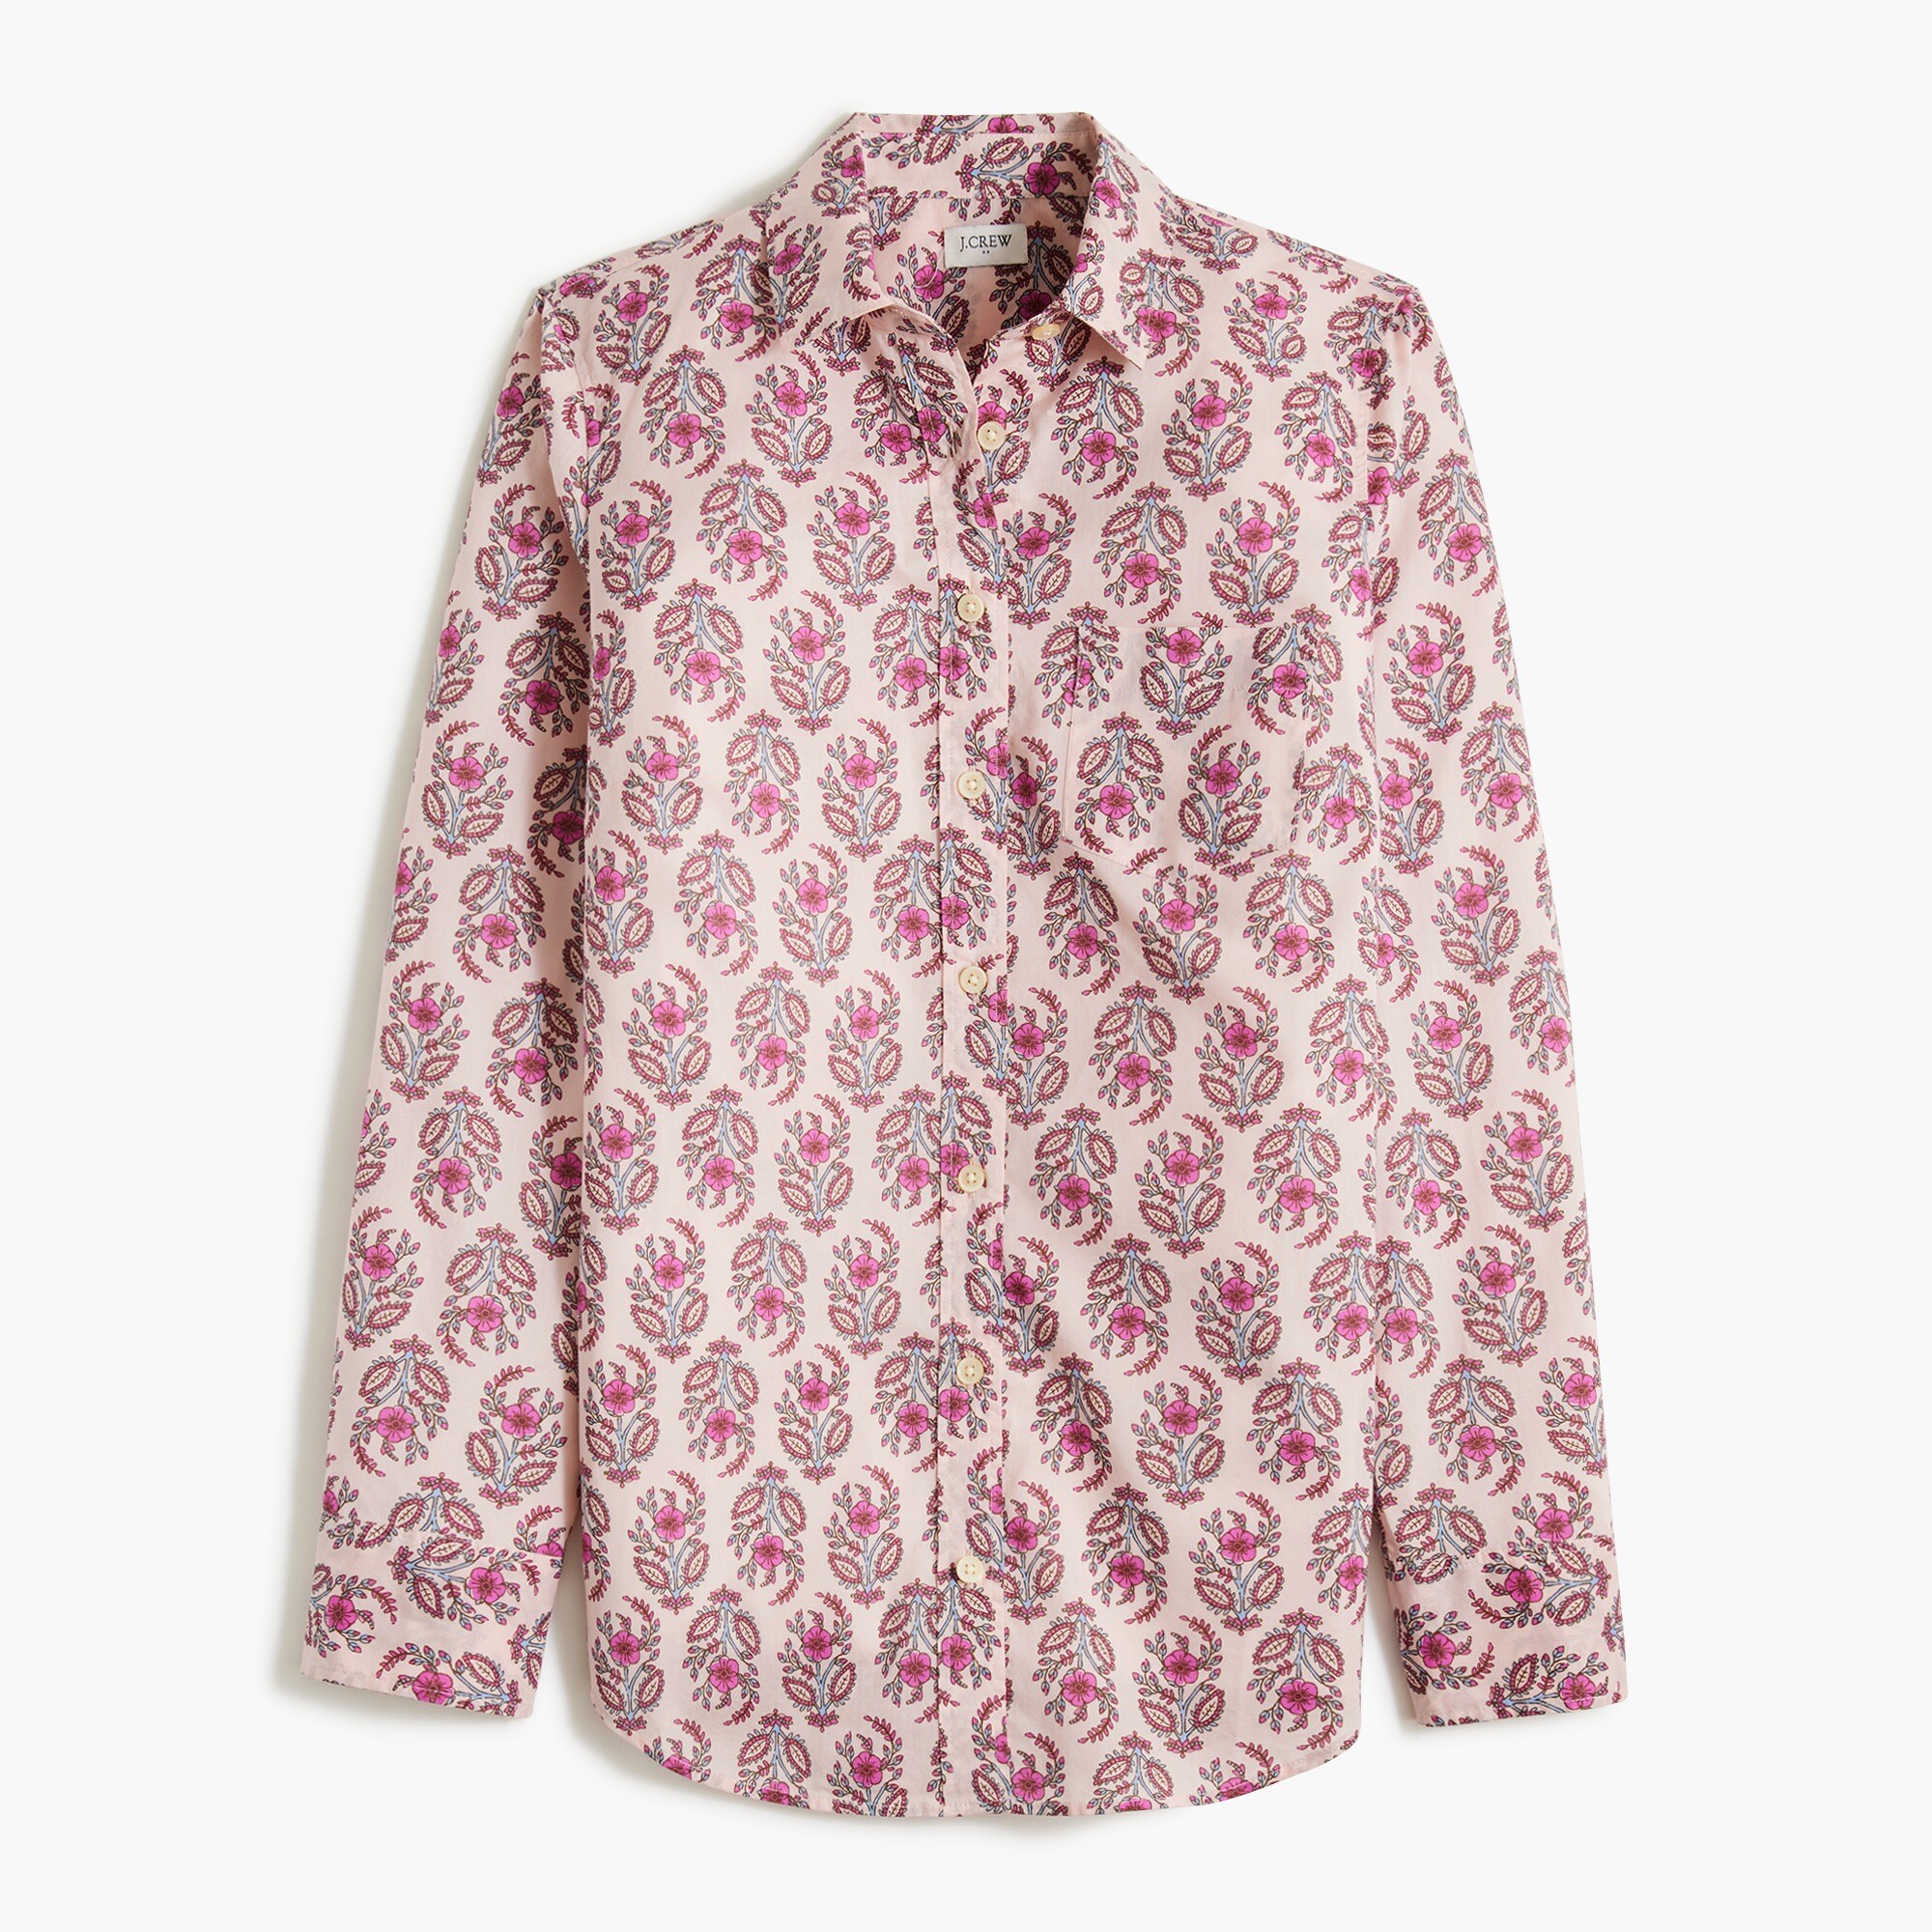  Petite cotton poplin shirt in signature fit